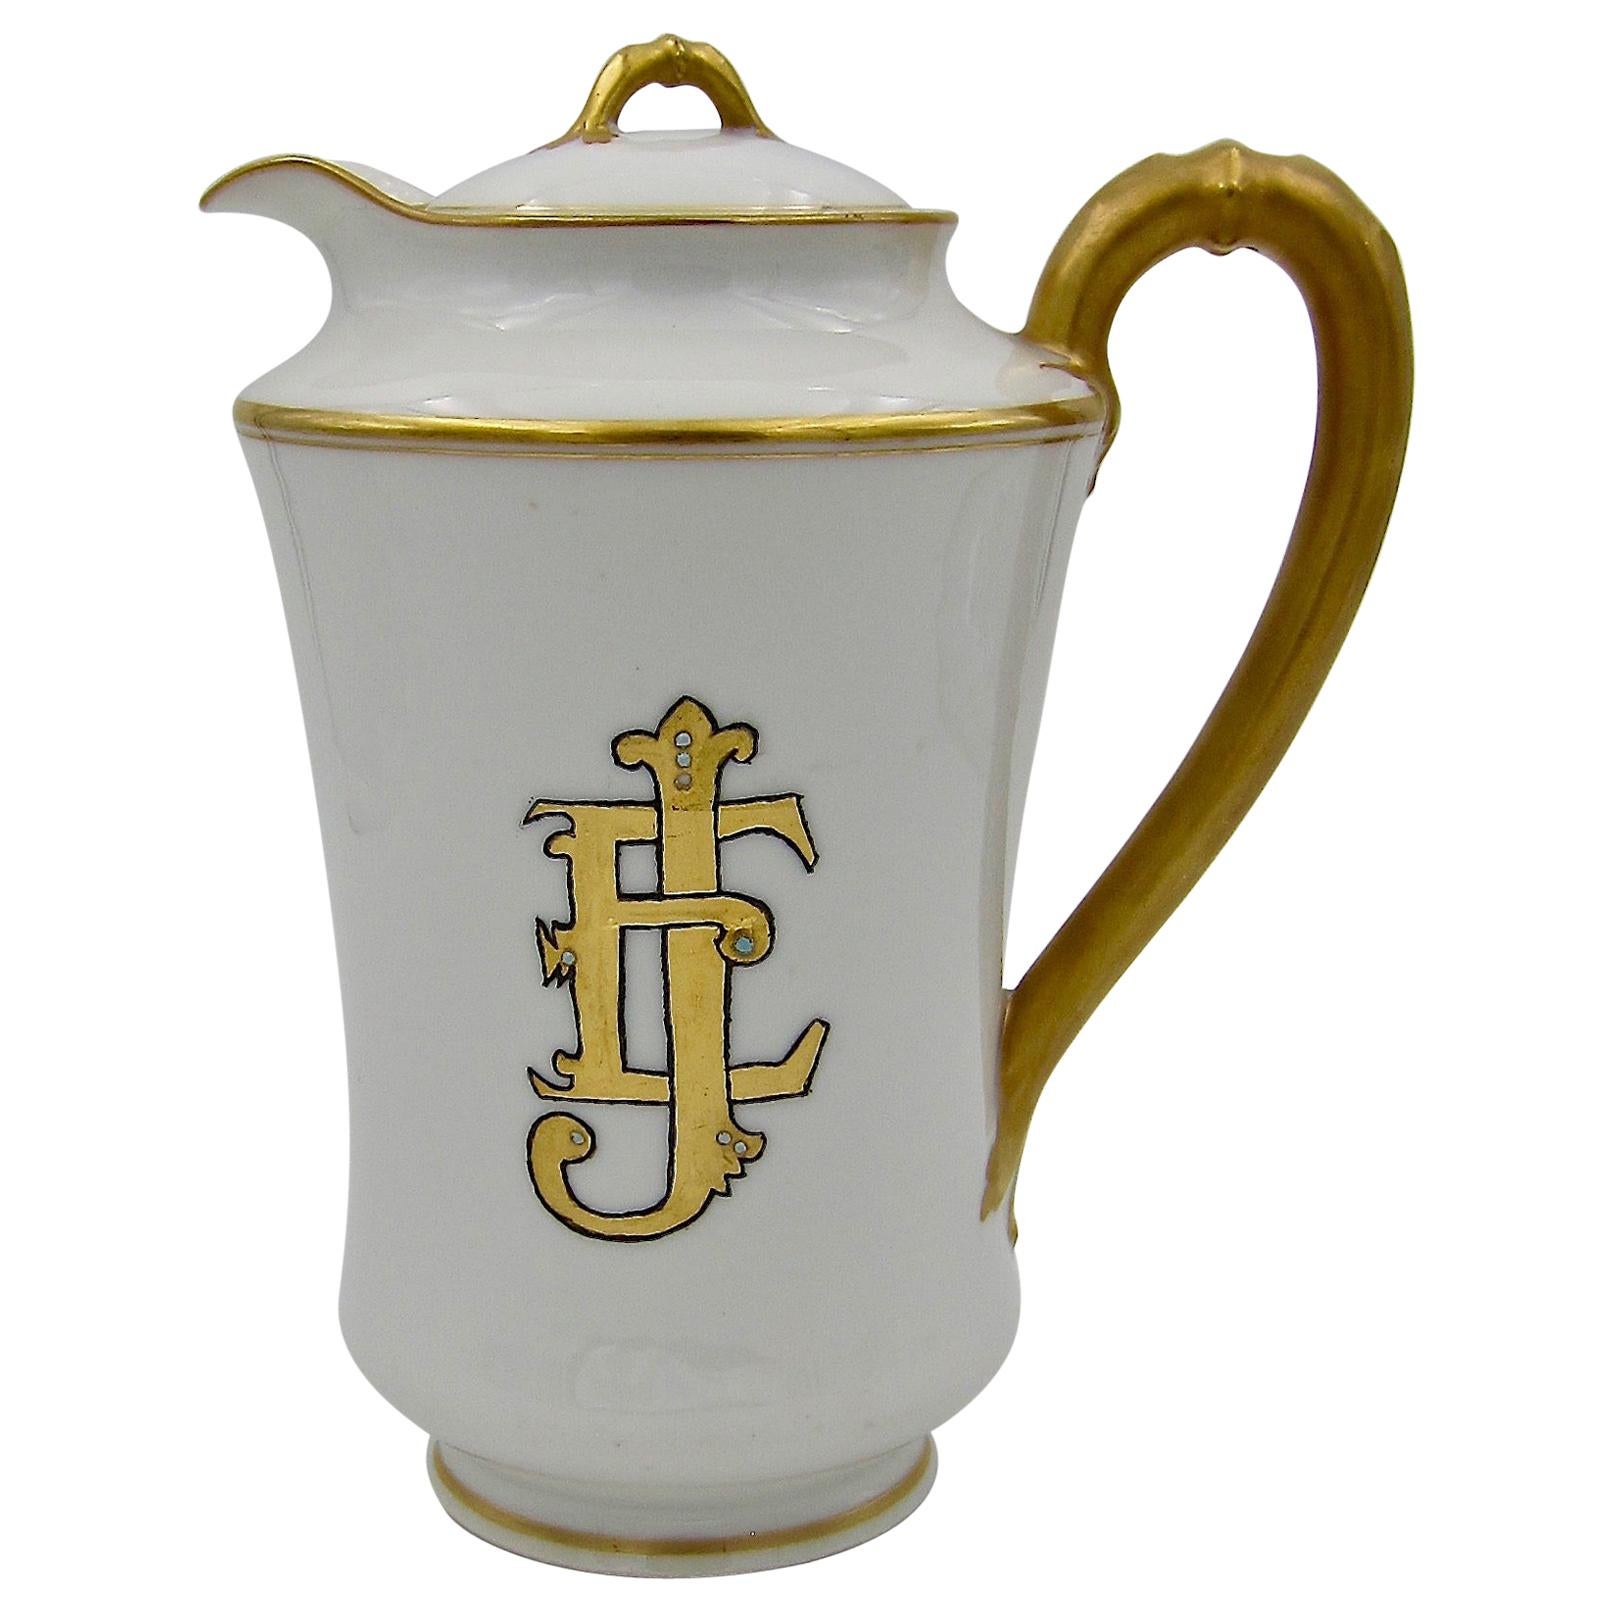 French Haviland Limoges Porcelain Teapot with Gilt Accents